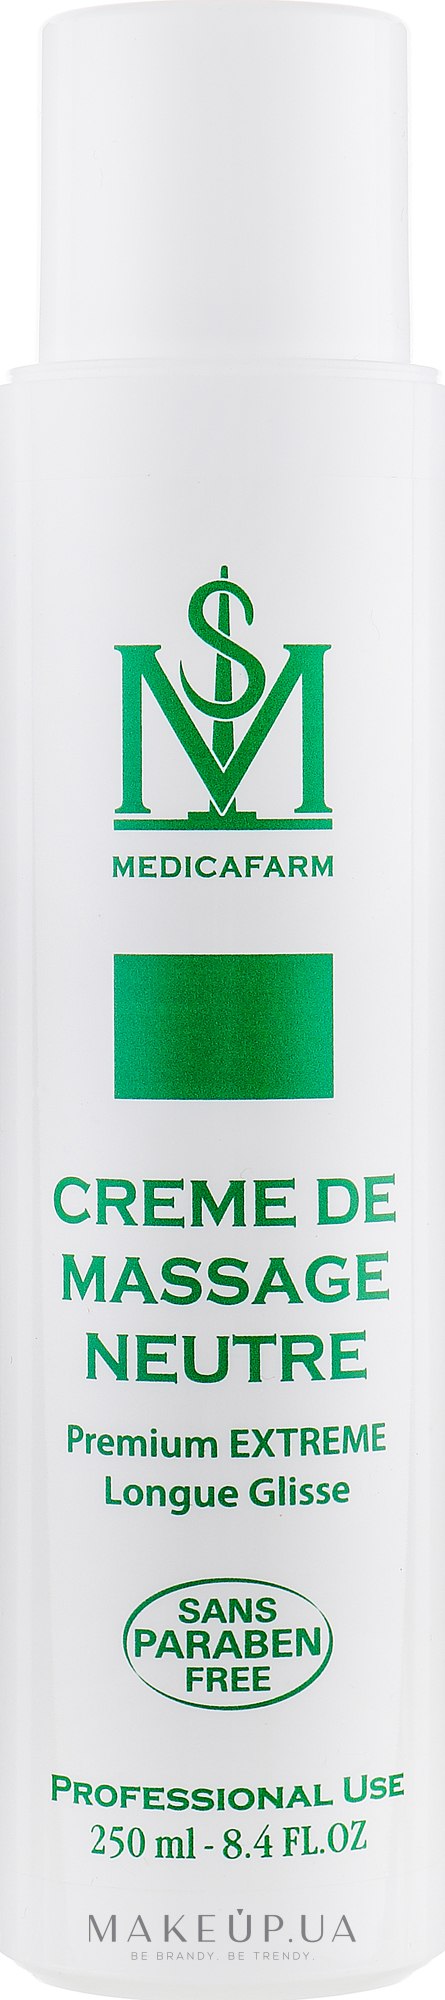 Нейтральний масажний крем екстремально тривалого ковзання - Medicafarm Premium Extreme Longue Glisse Creme — фото 250ml